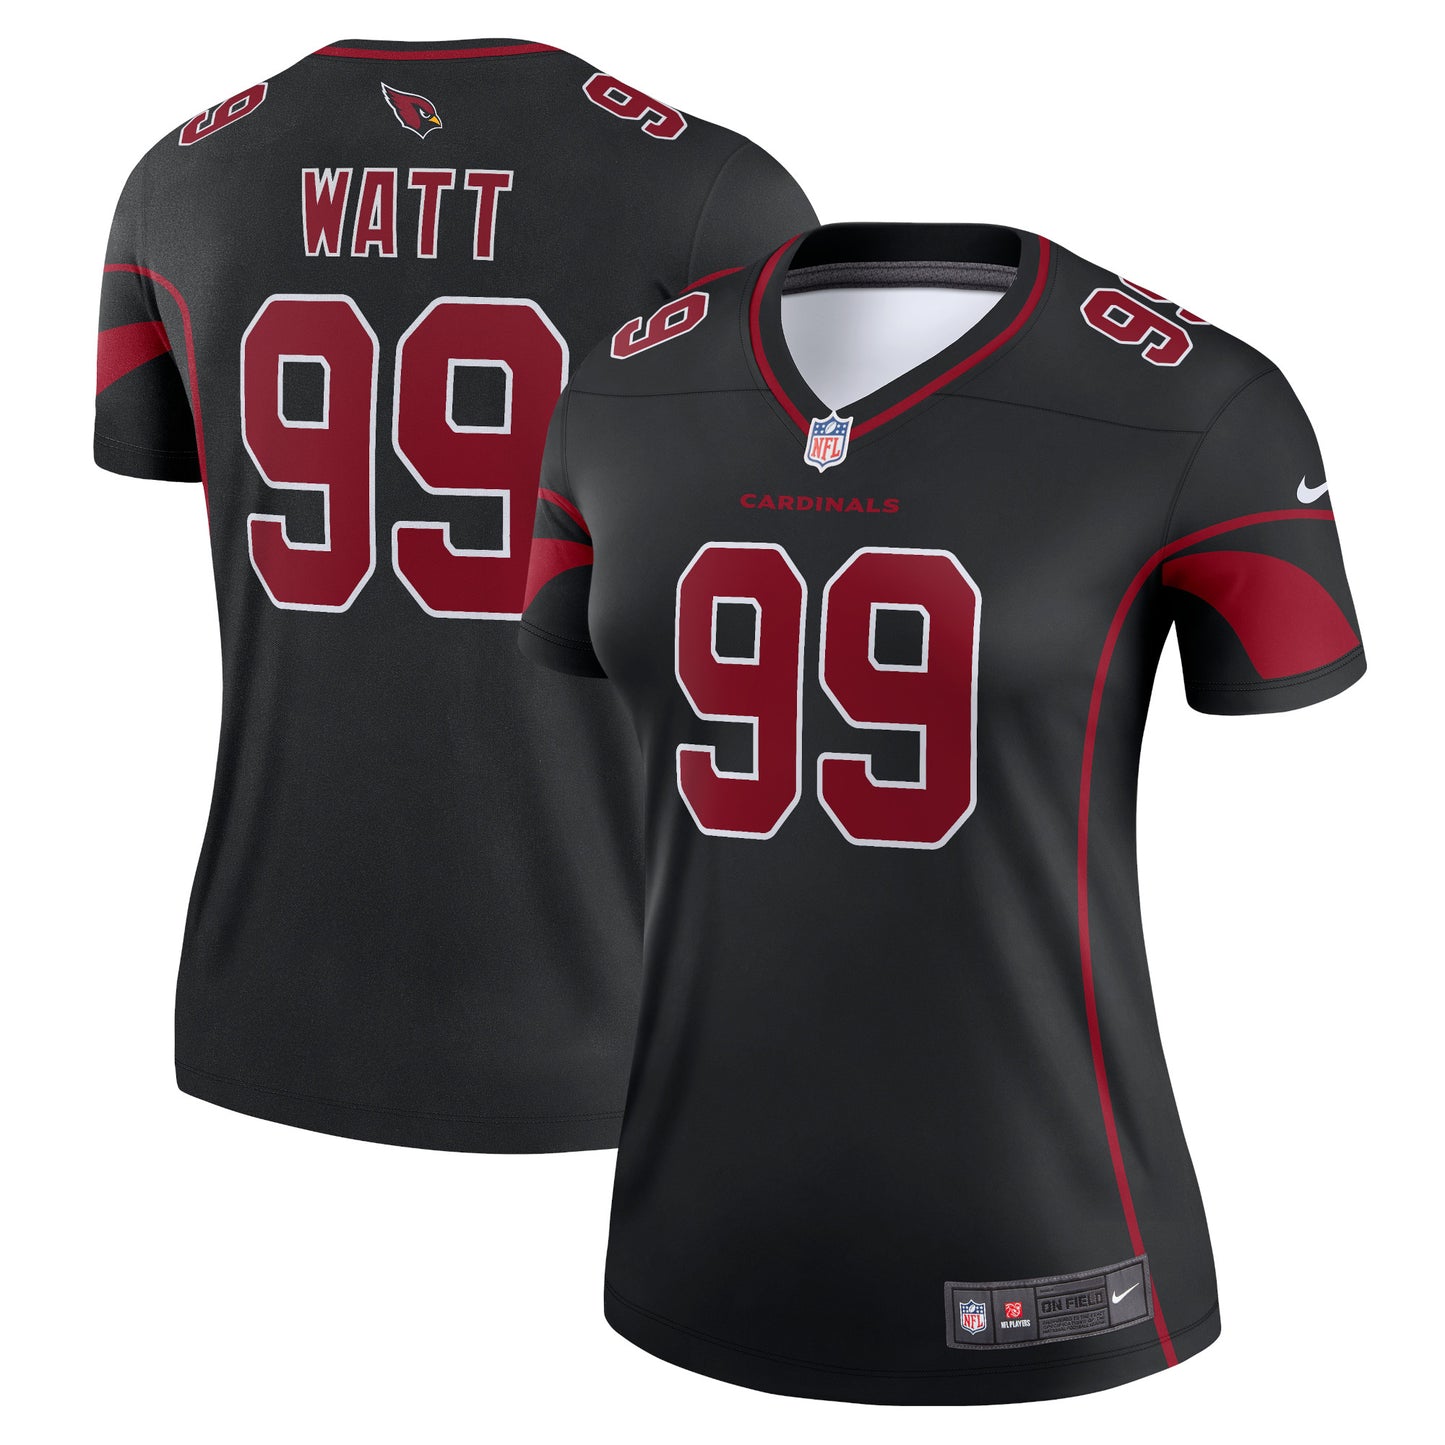 J.J. Watt Arizona Cardinals Nike Women's Legend Jersey - Black